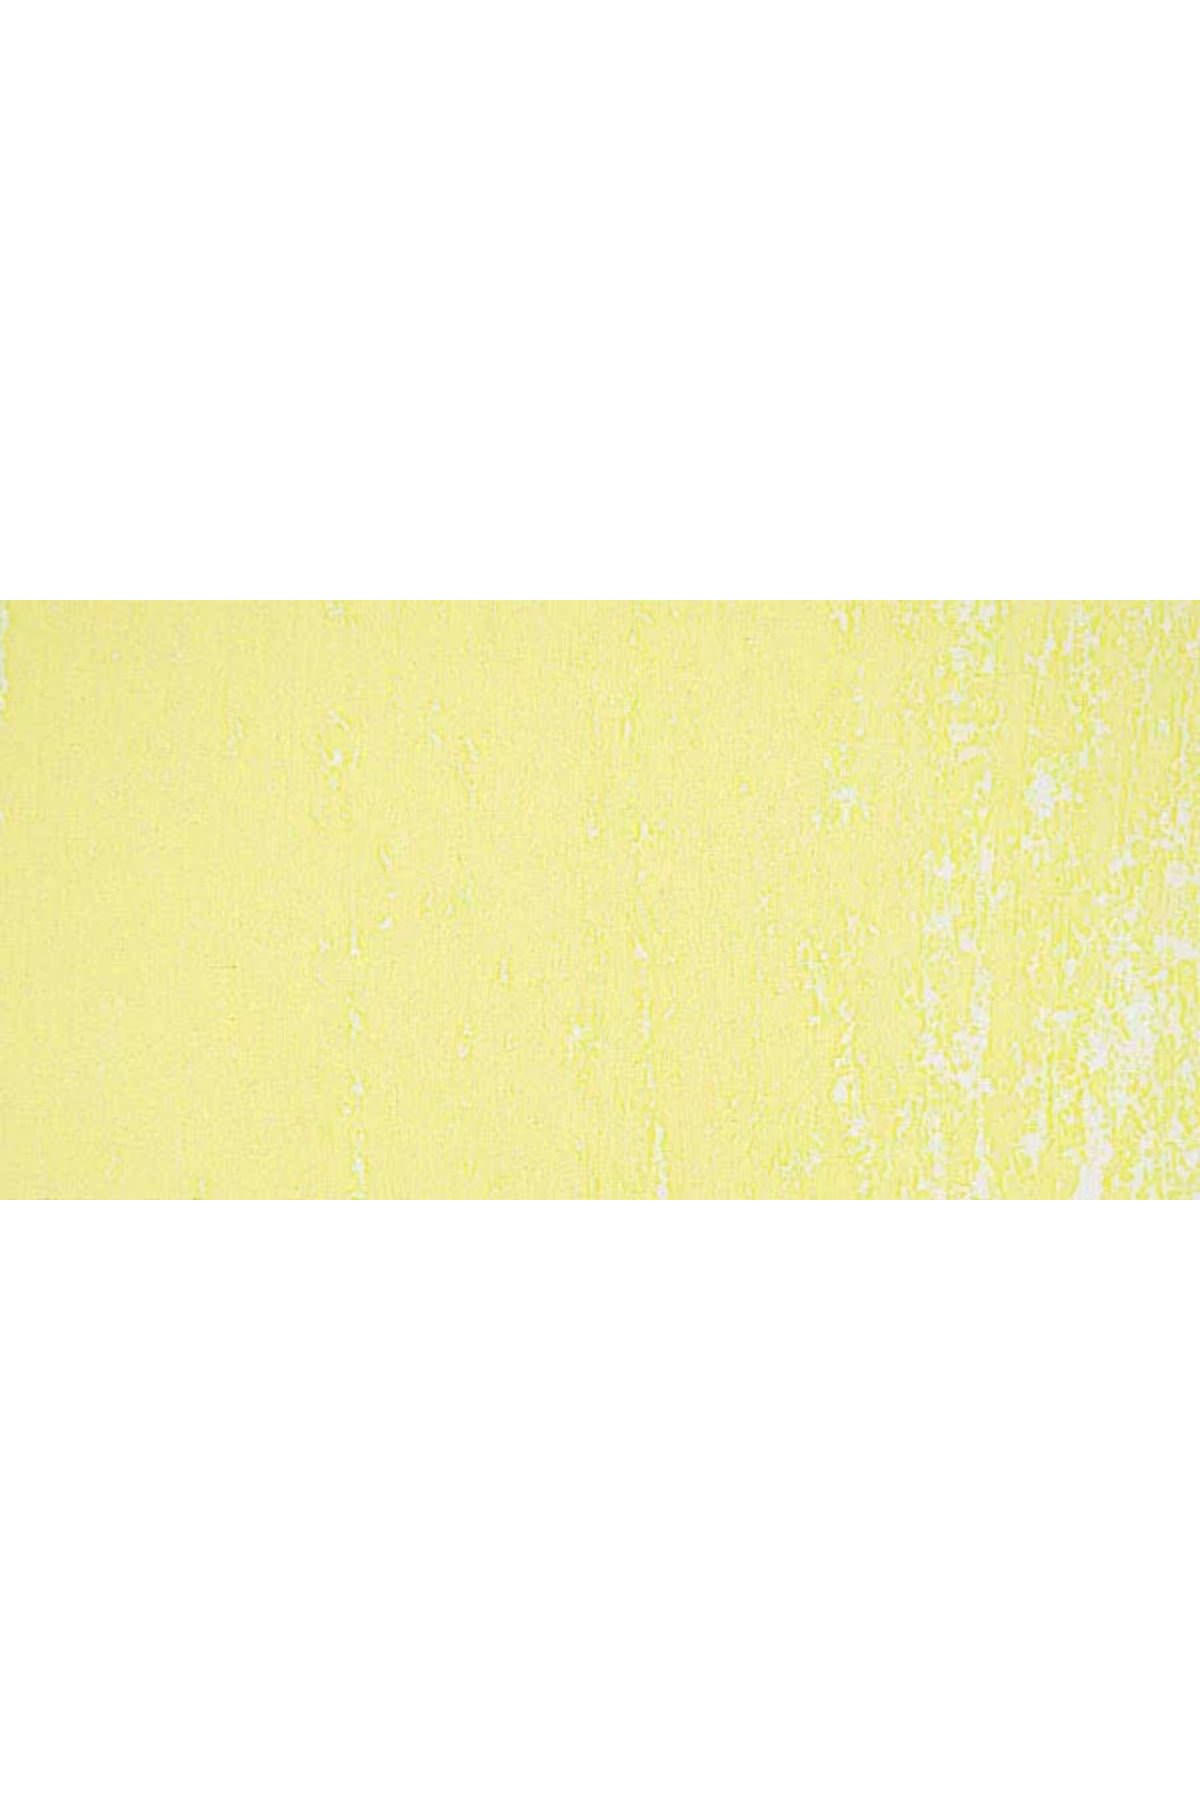 Schmincke Soft Pastel Boya Titanium Yellow H 007